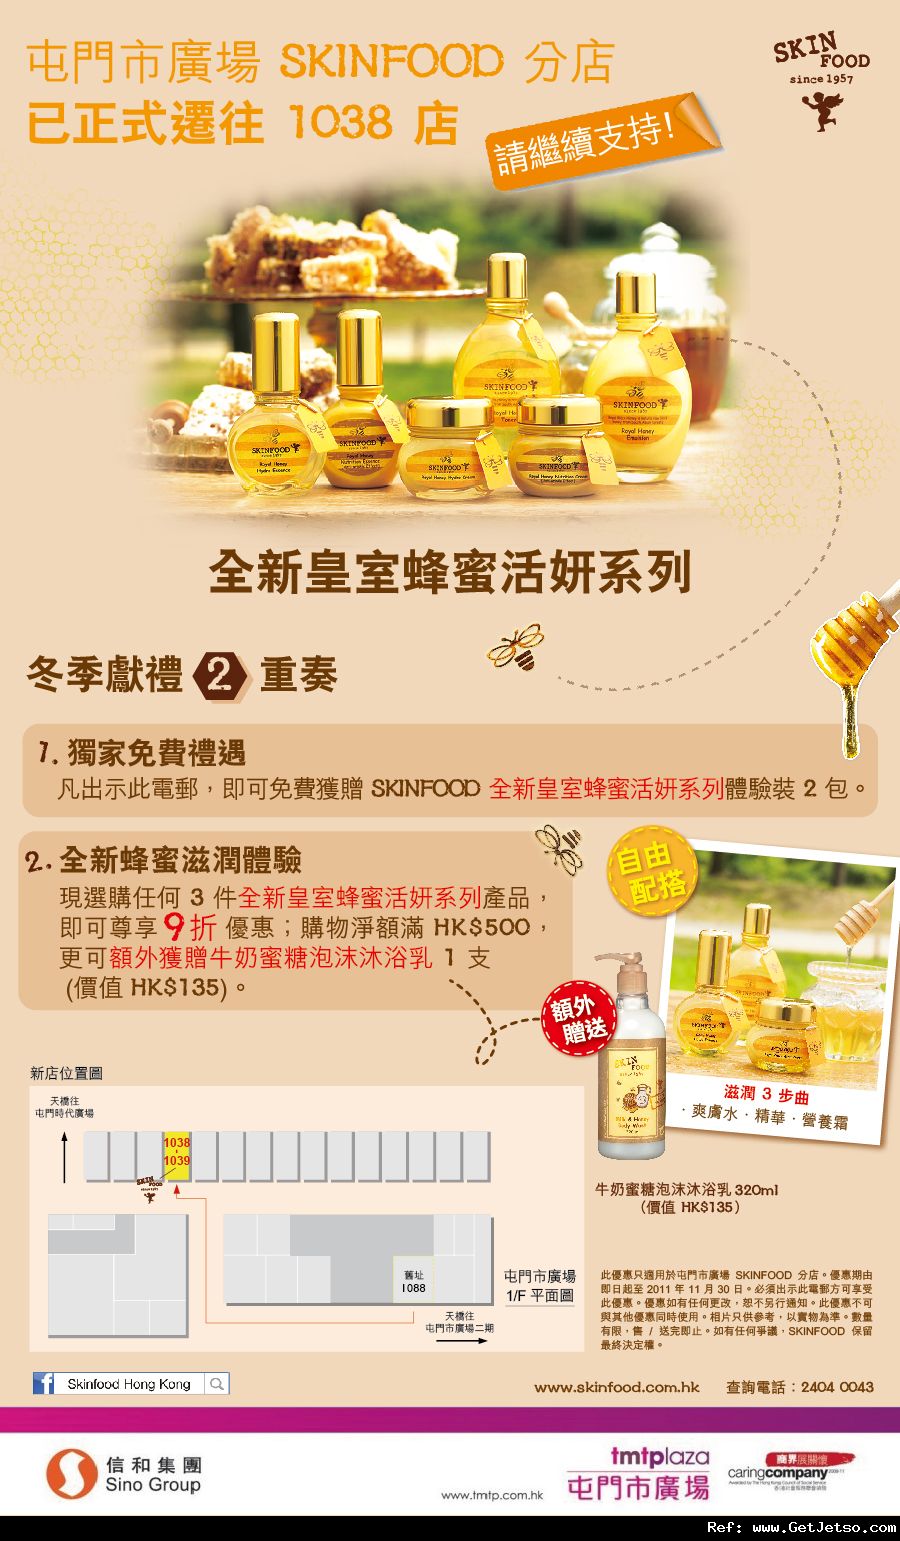 SKINFOOD 免費皇室蜂蜜活妍系列試用裝優惠@屯門市廣場(至11年11月30日)圖片1